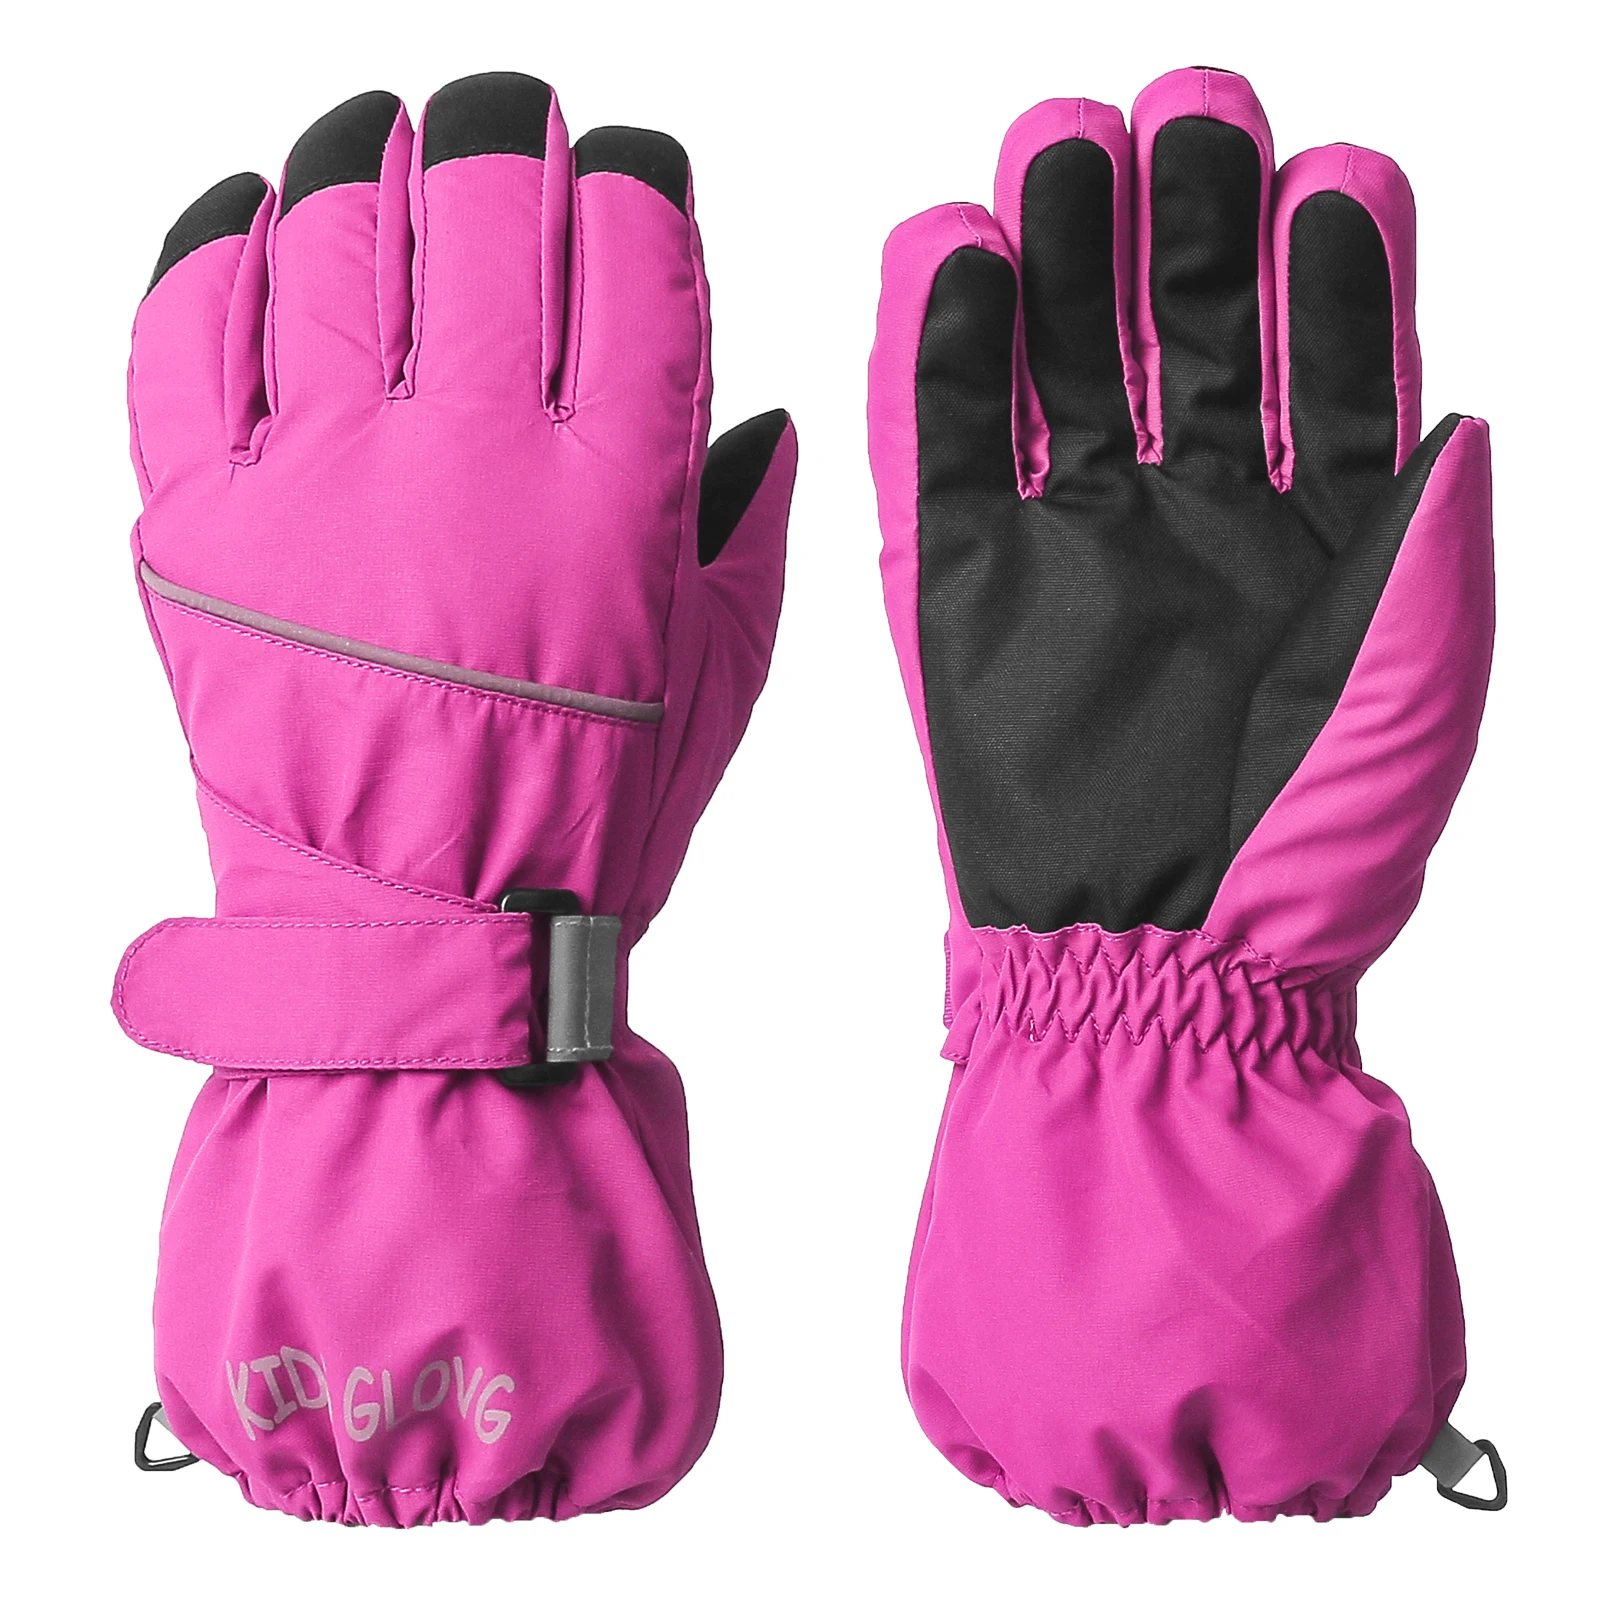 S Kids Waterproof Windproof Thermal Ski Gloves Snow Sports Gloves Pink 